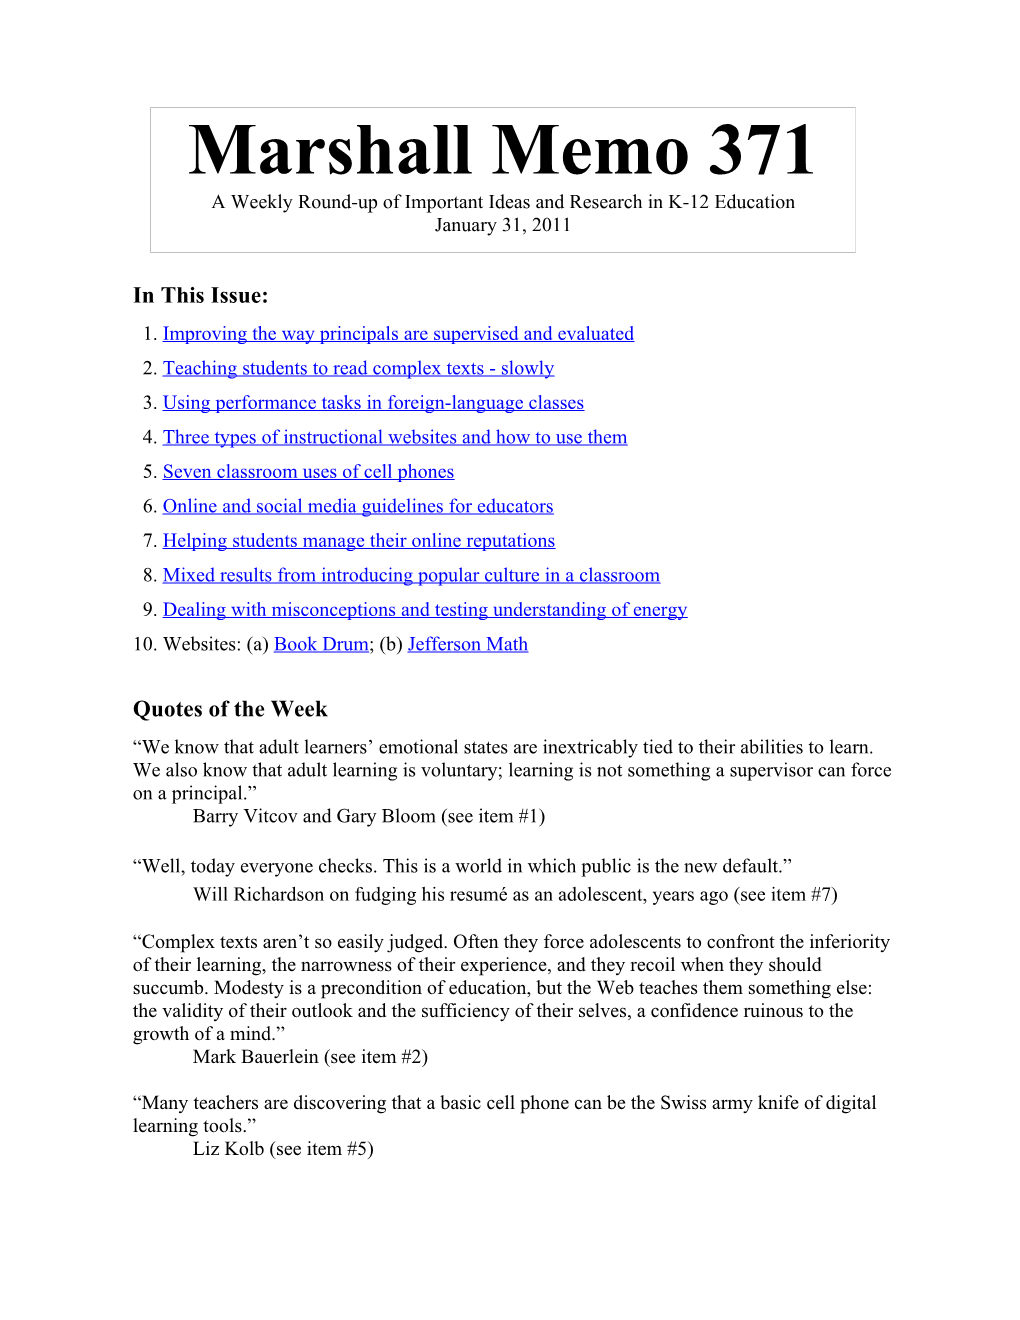 The Marshall Memo s1